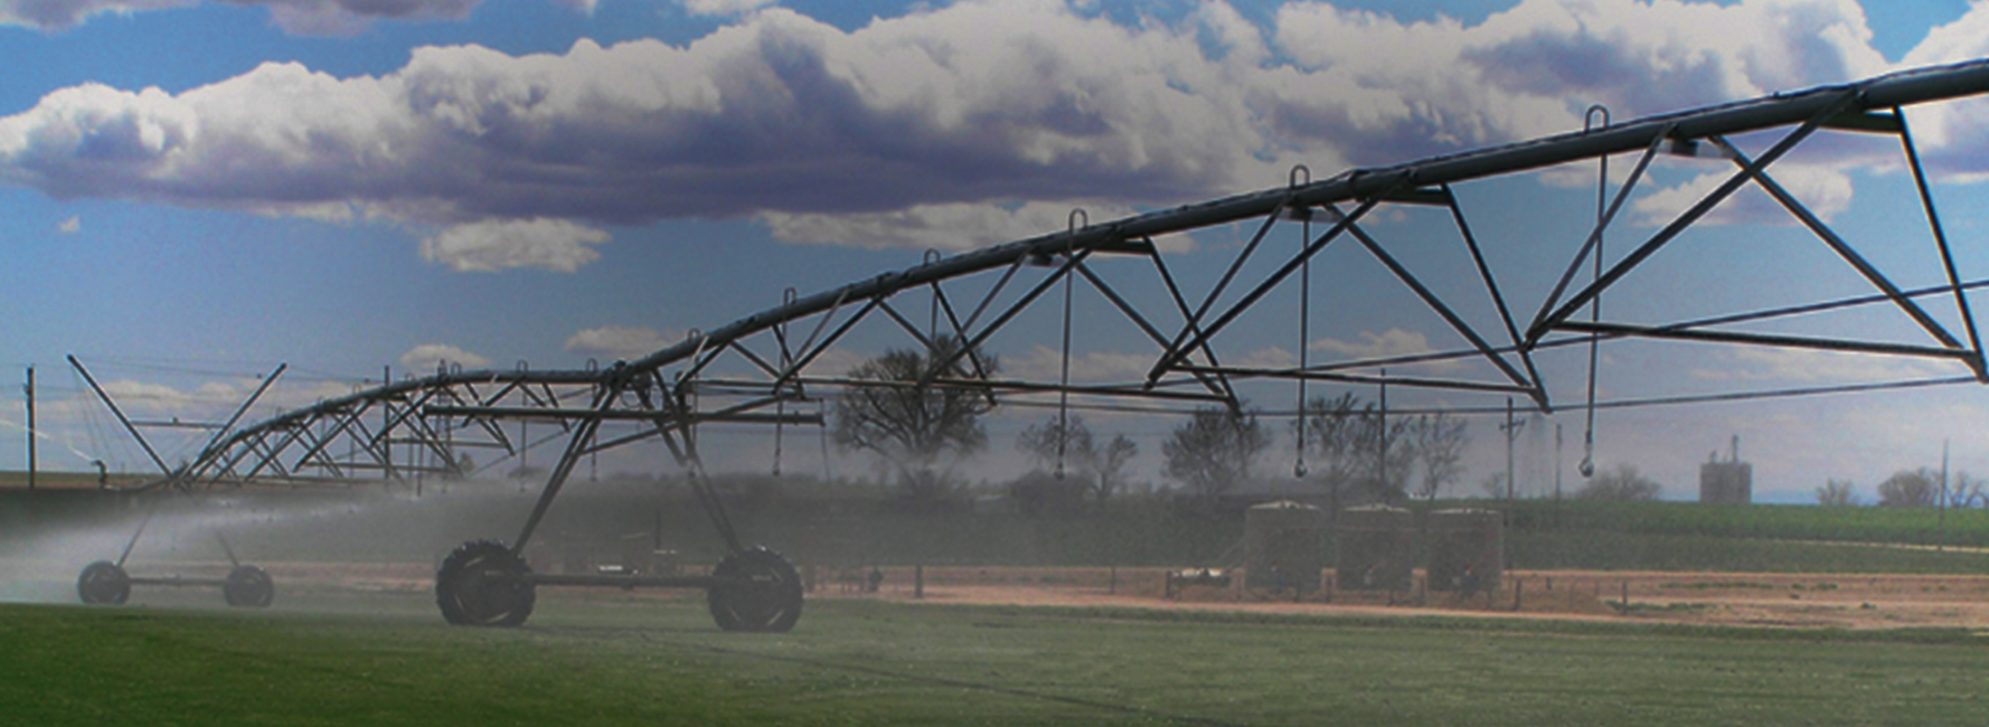 irrigation components